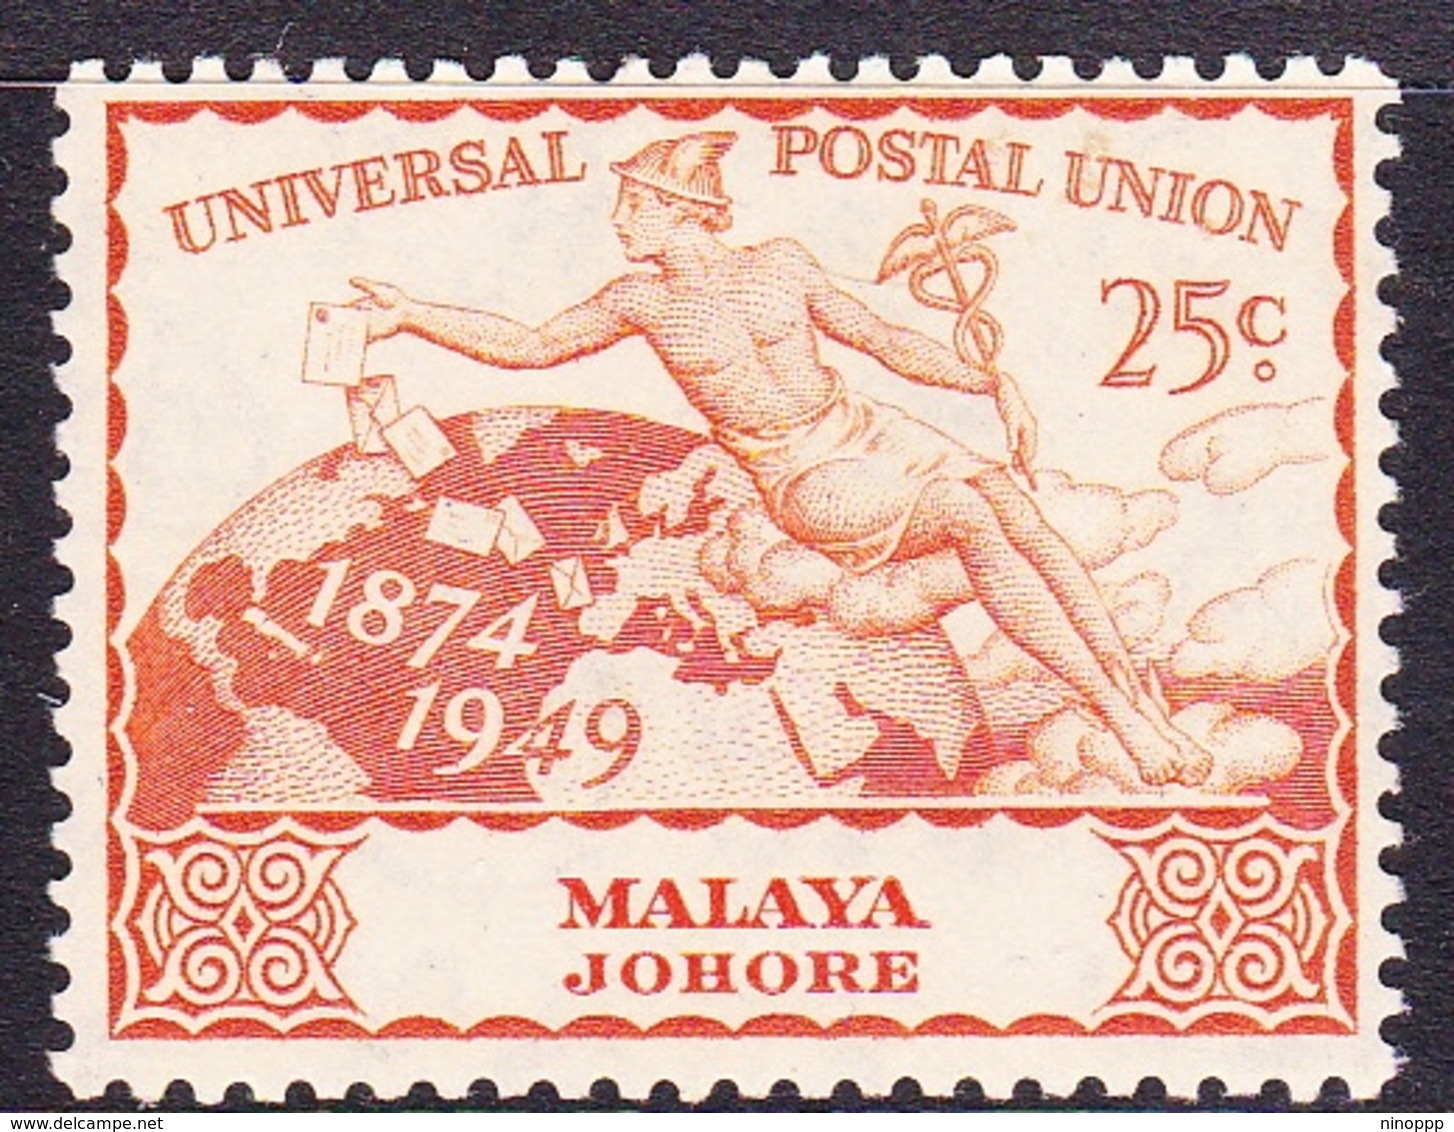 Malaysia-Johore SG 150 1949 UPU, 25c Orange, Mint Hinged - Johore